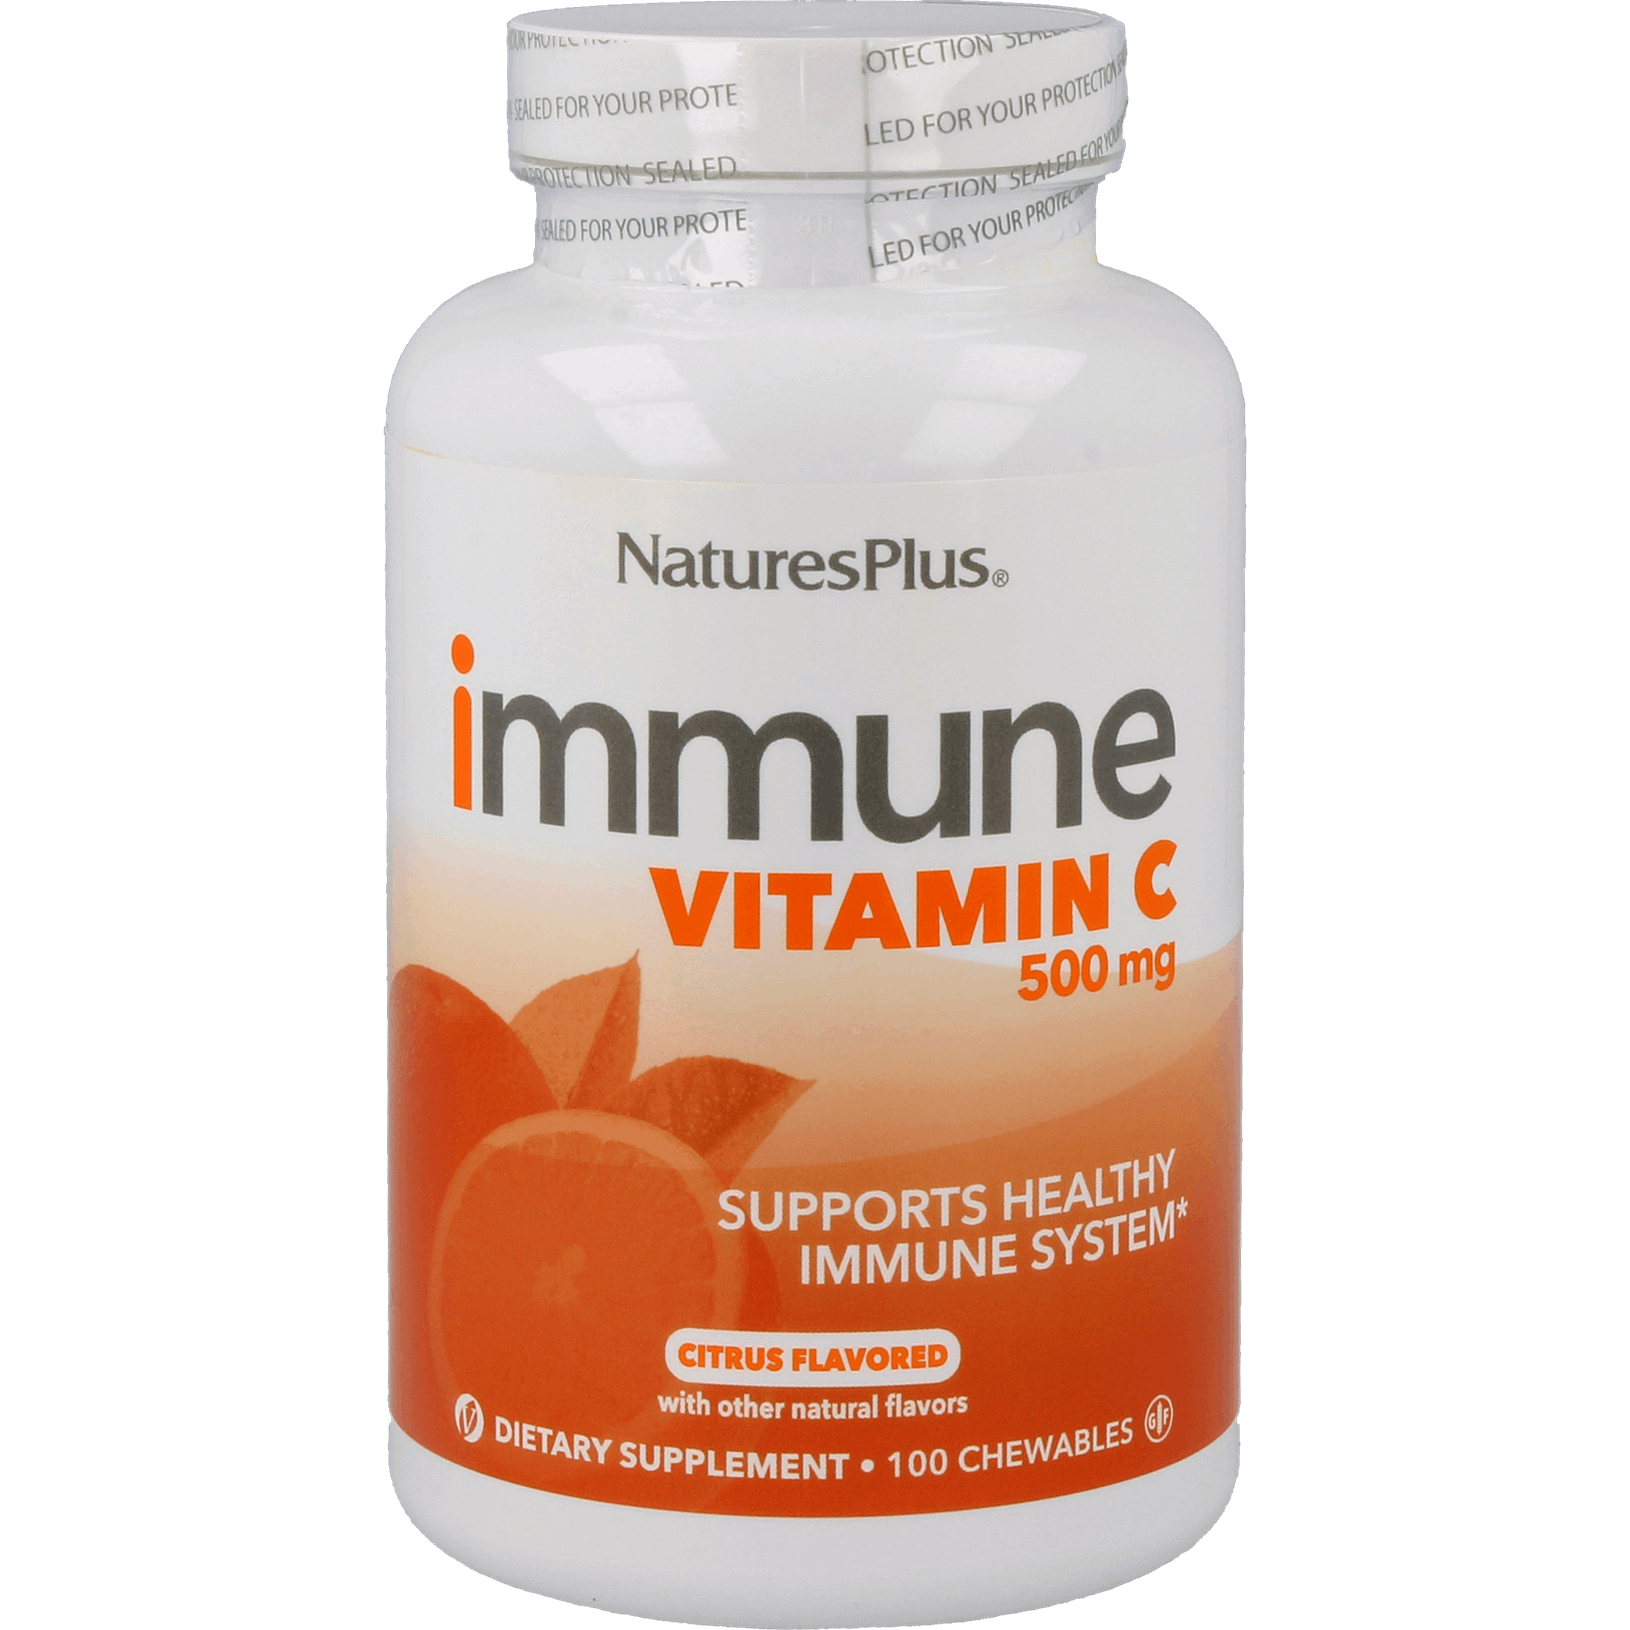 Immune Vitamin C - littlehealthstore